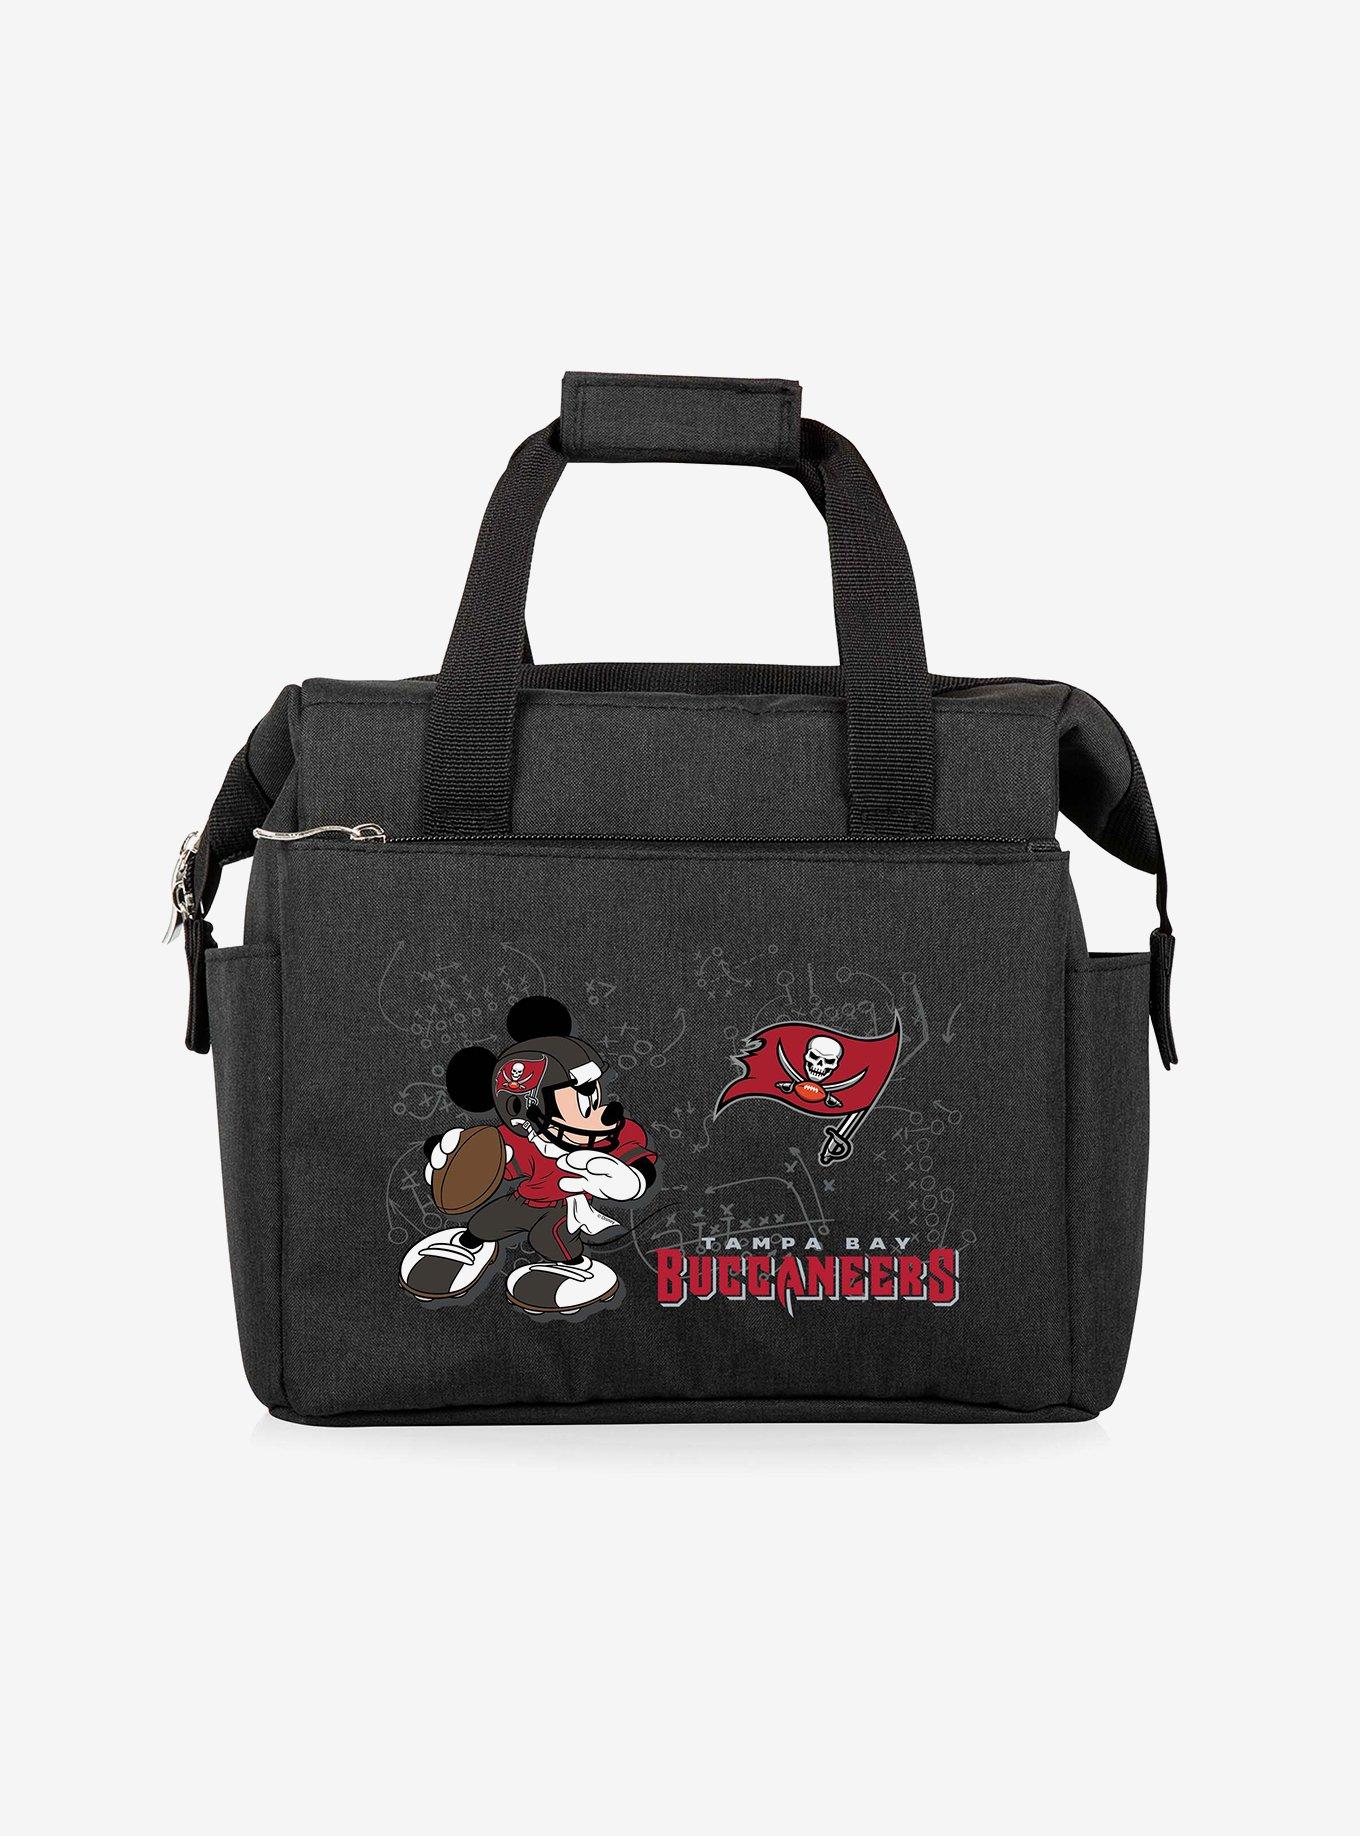 Disney Mickey Mouse NFL Tampa Bay Buccaneers Bag